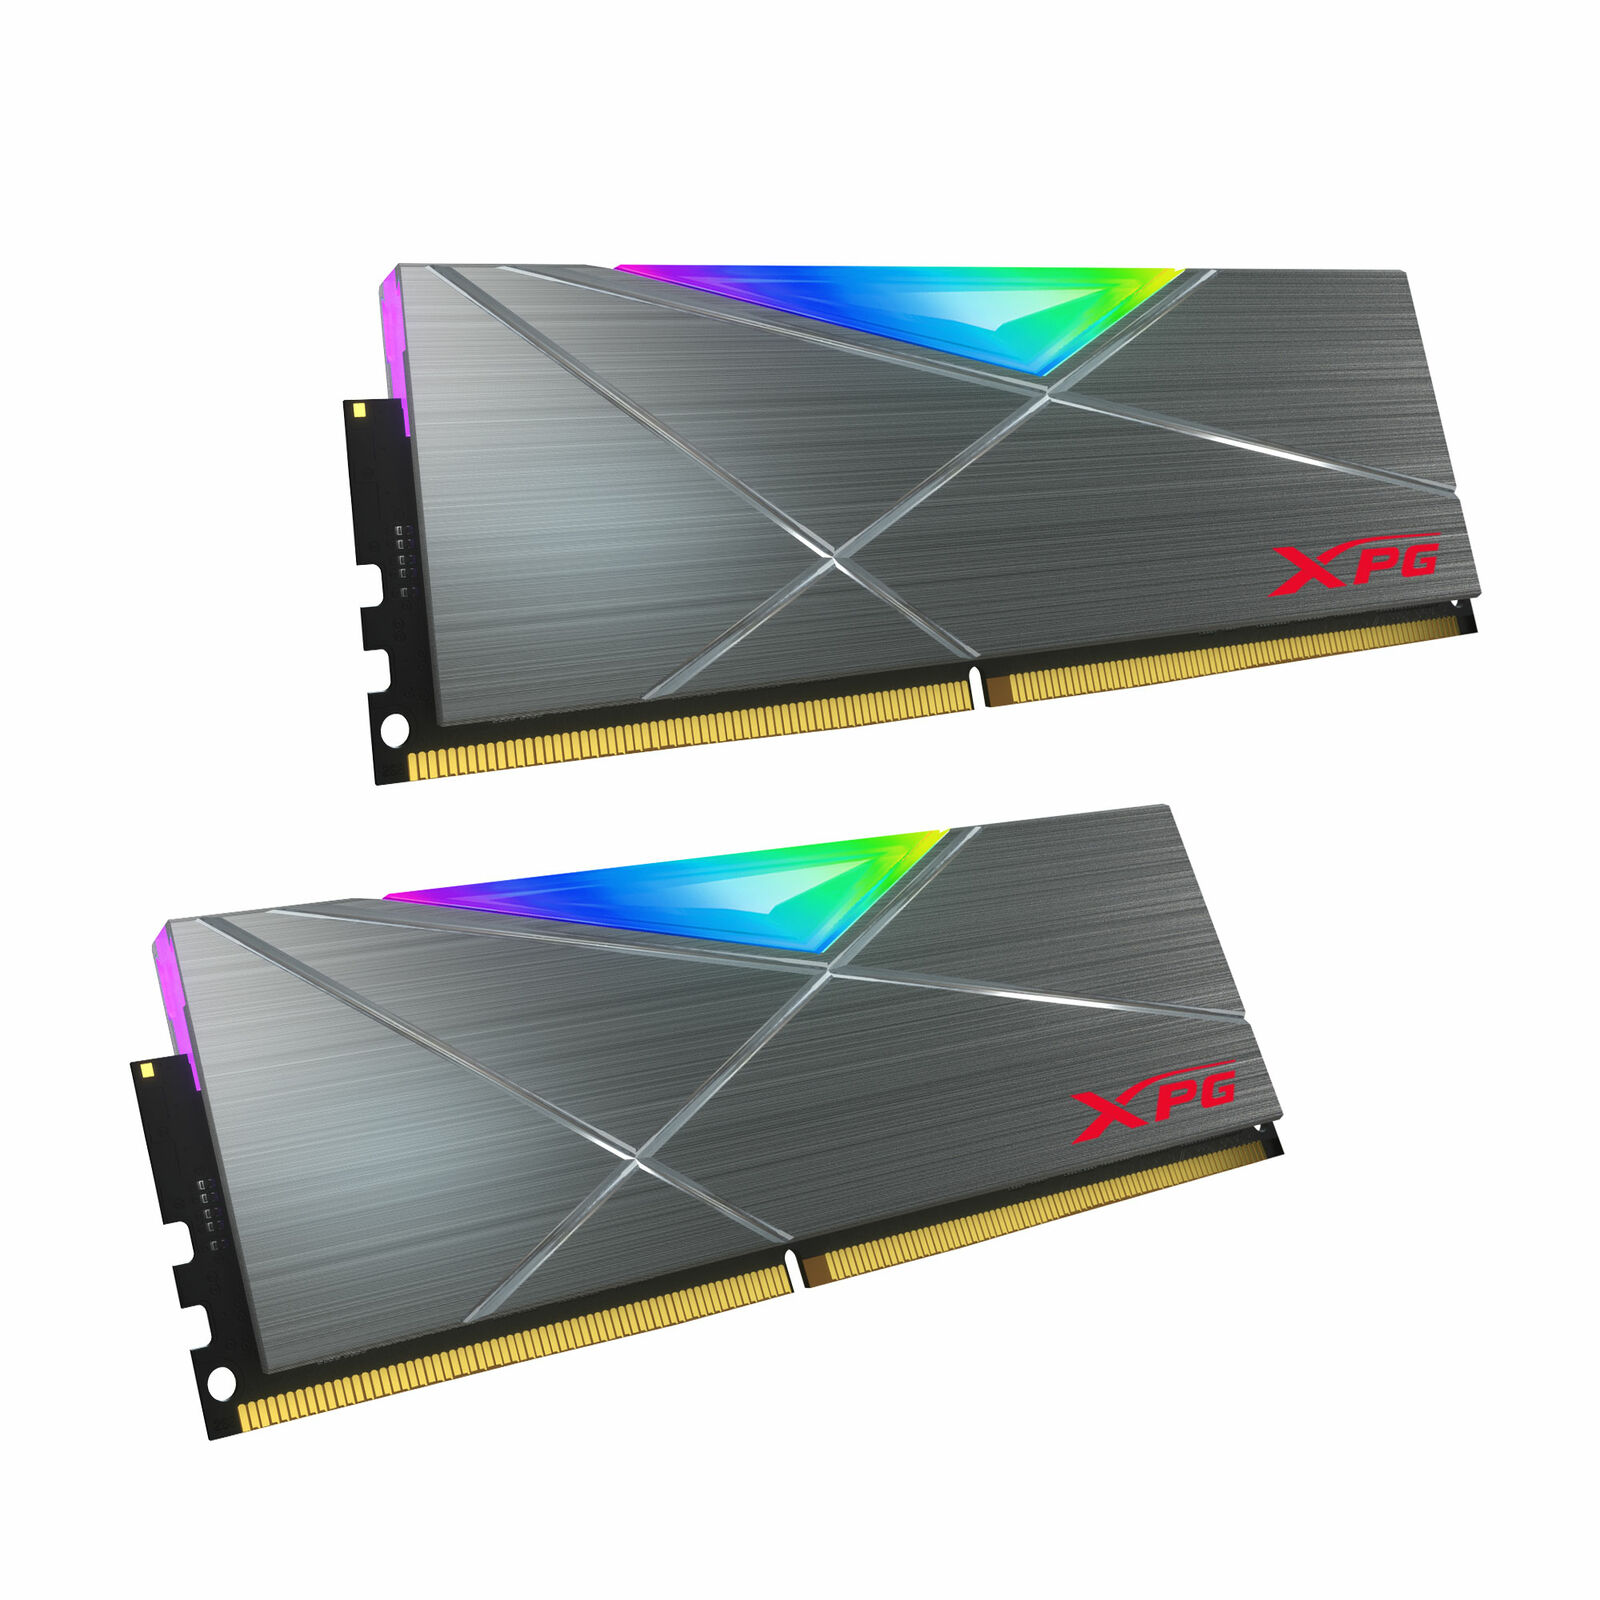 XPG SPECTRIX D50 RGB DDR4 16GB 2x8GB DDR4 3200MHz CL16 Grey 2PK RAM Upgrade